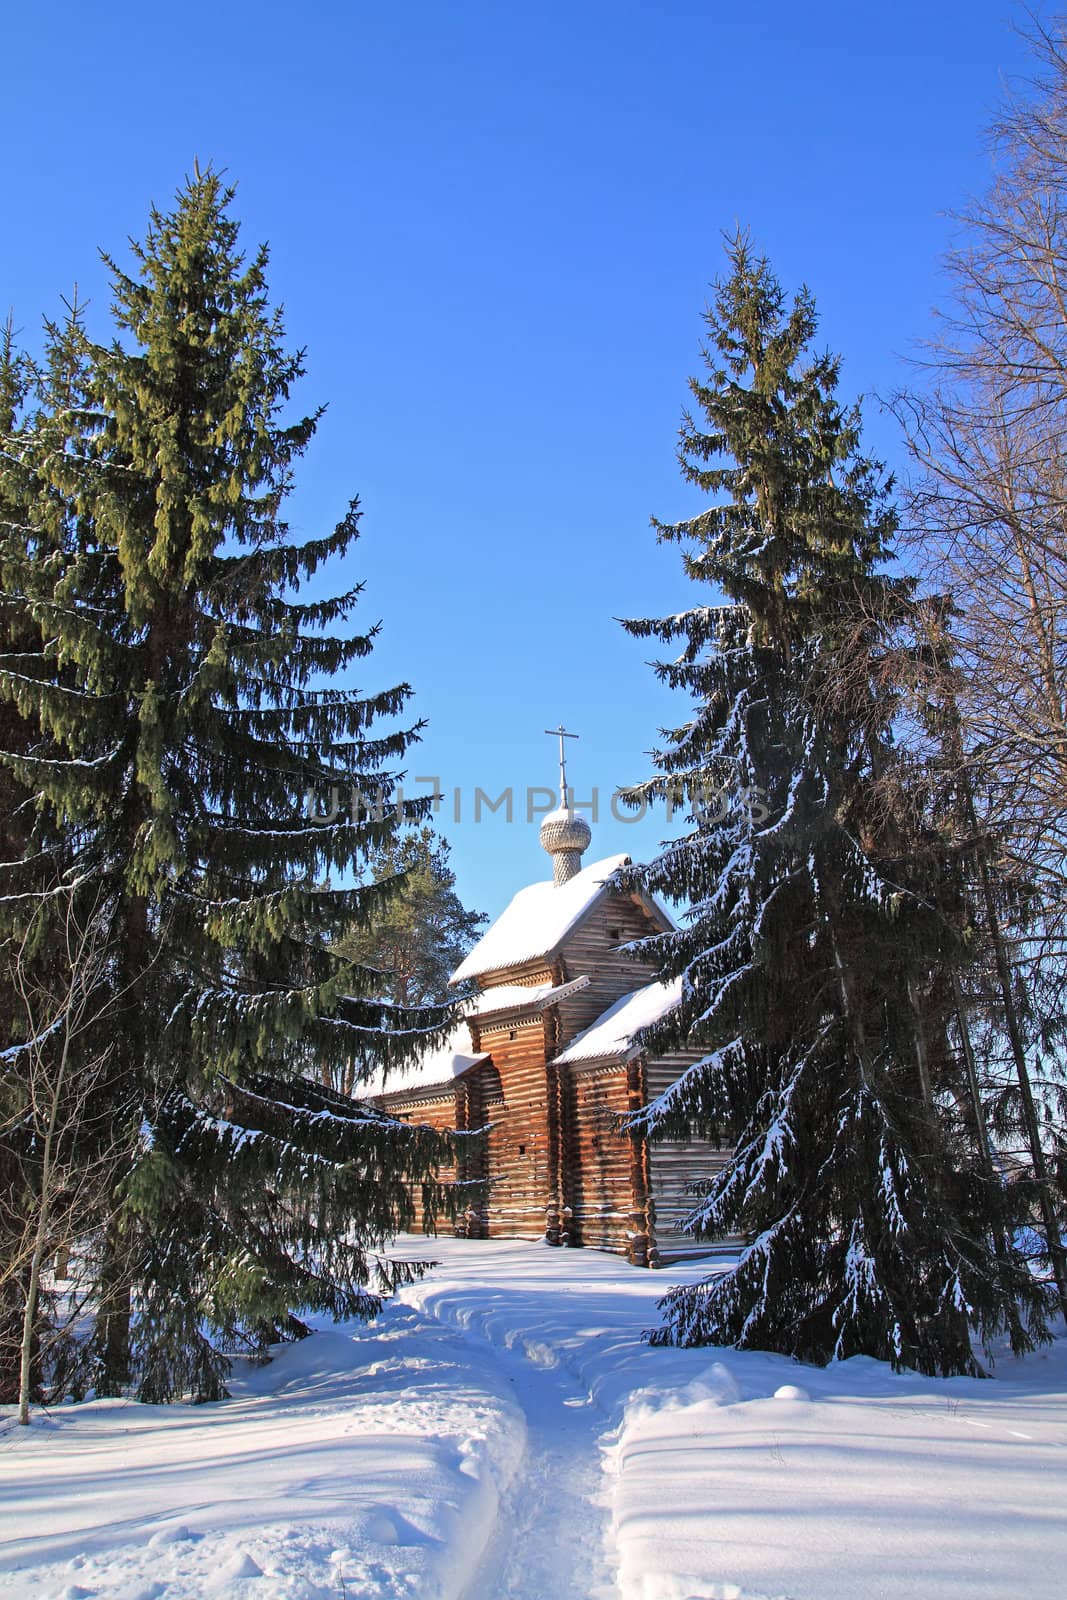 wooden chapel amongst snow tree by basel101658